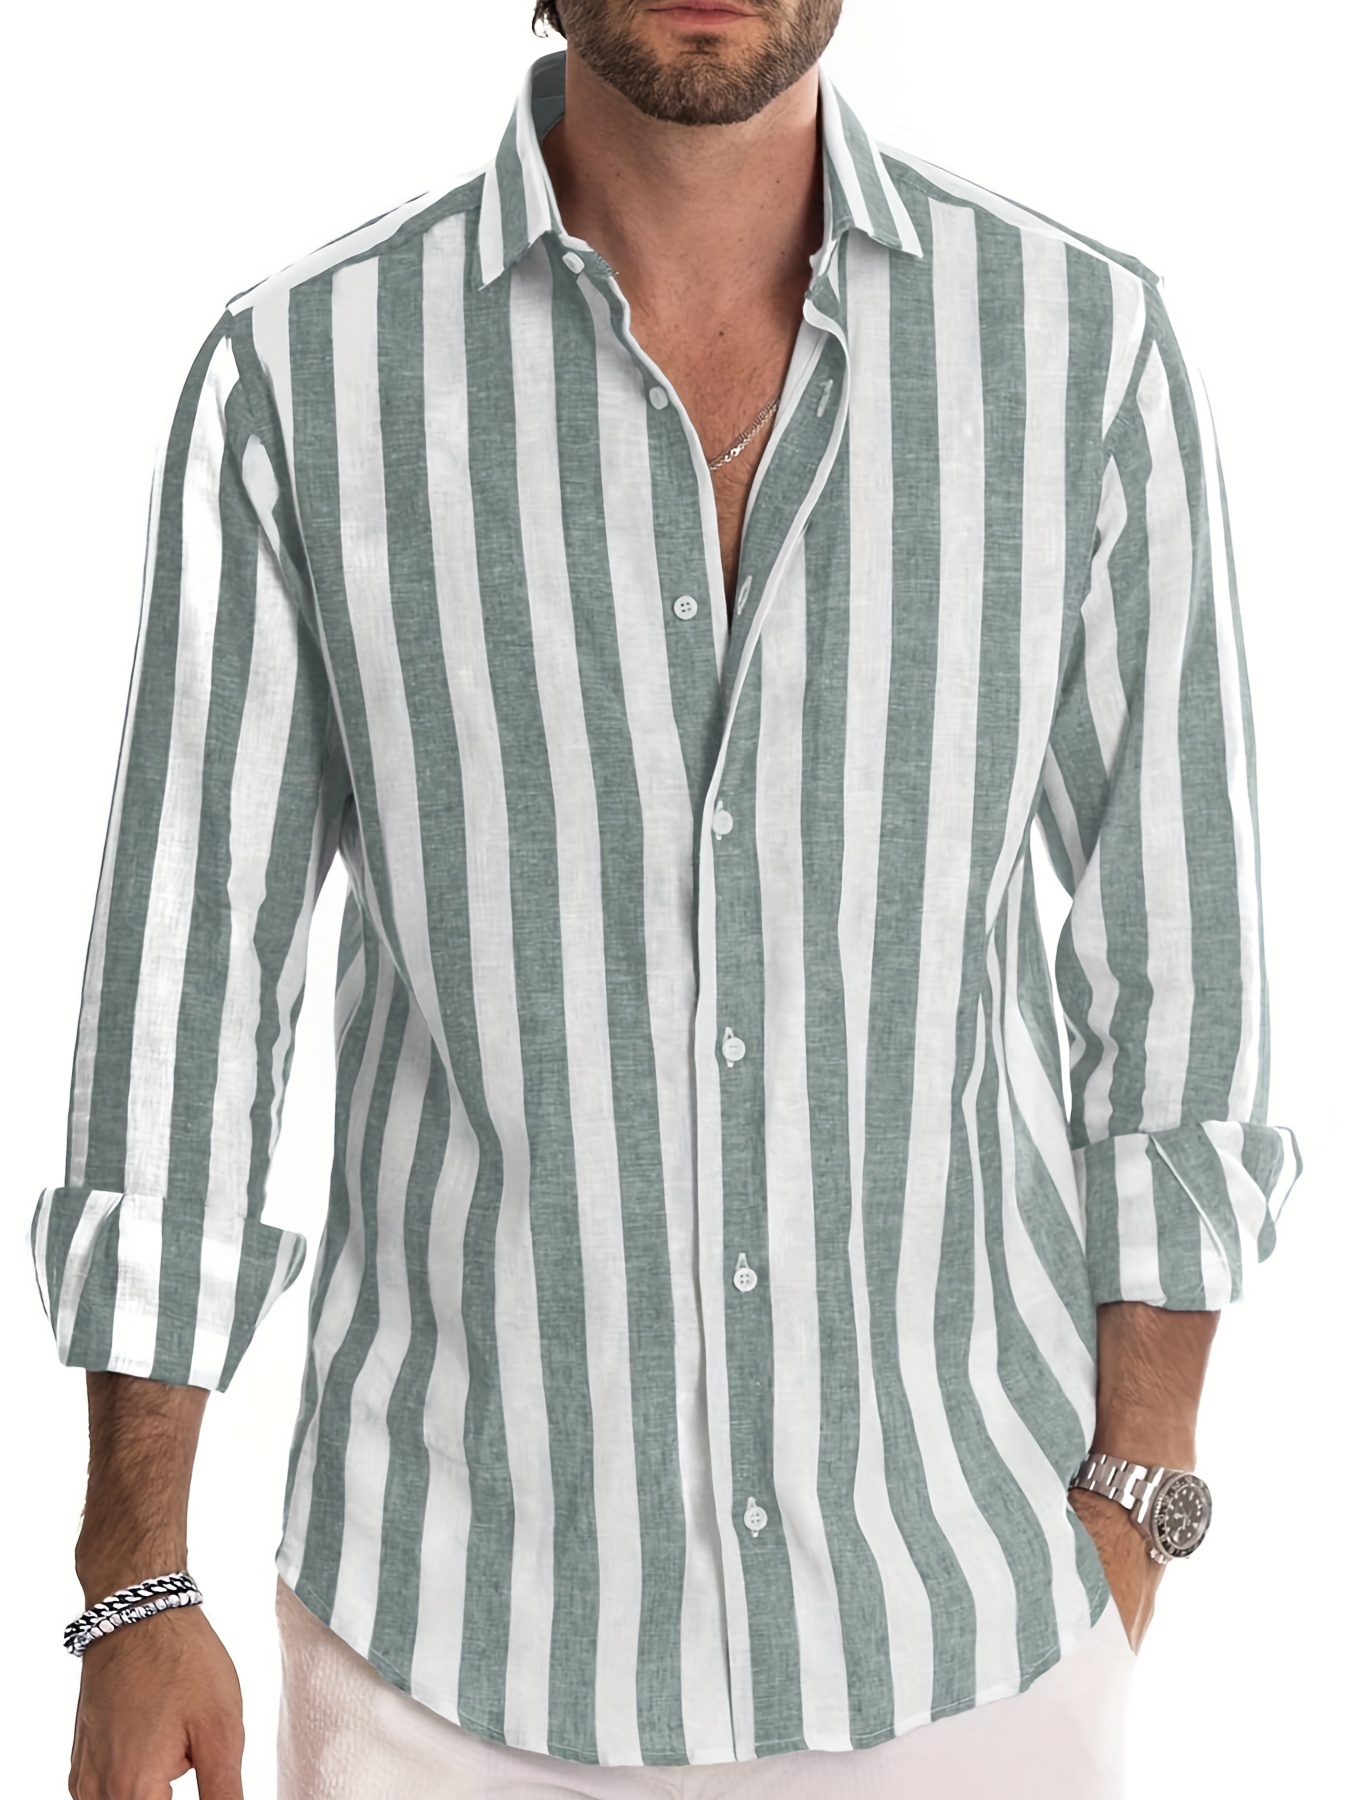 Personalized Striped Sleeve Sweatshirt